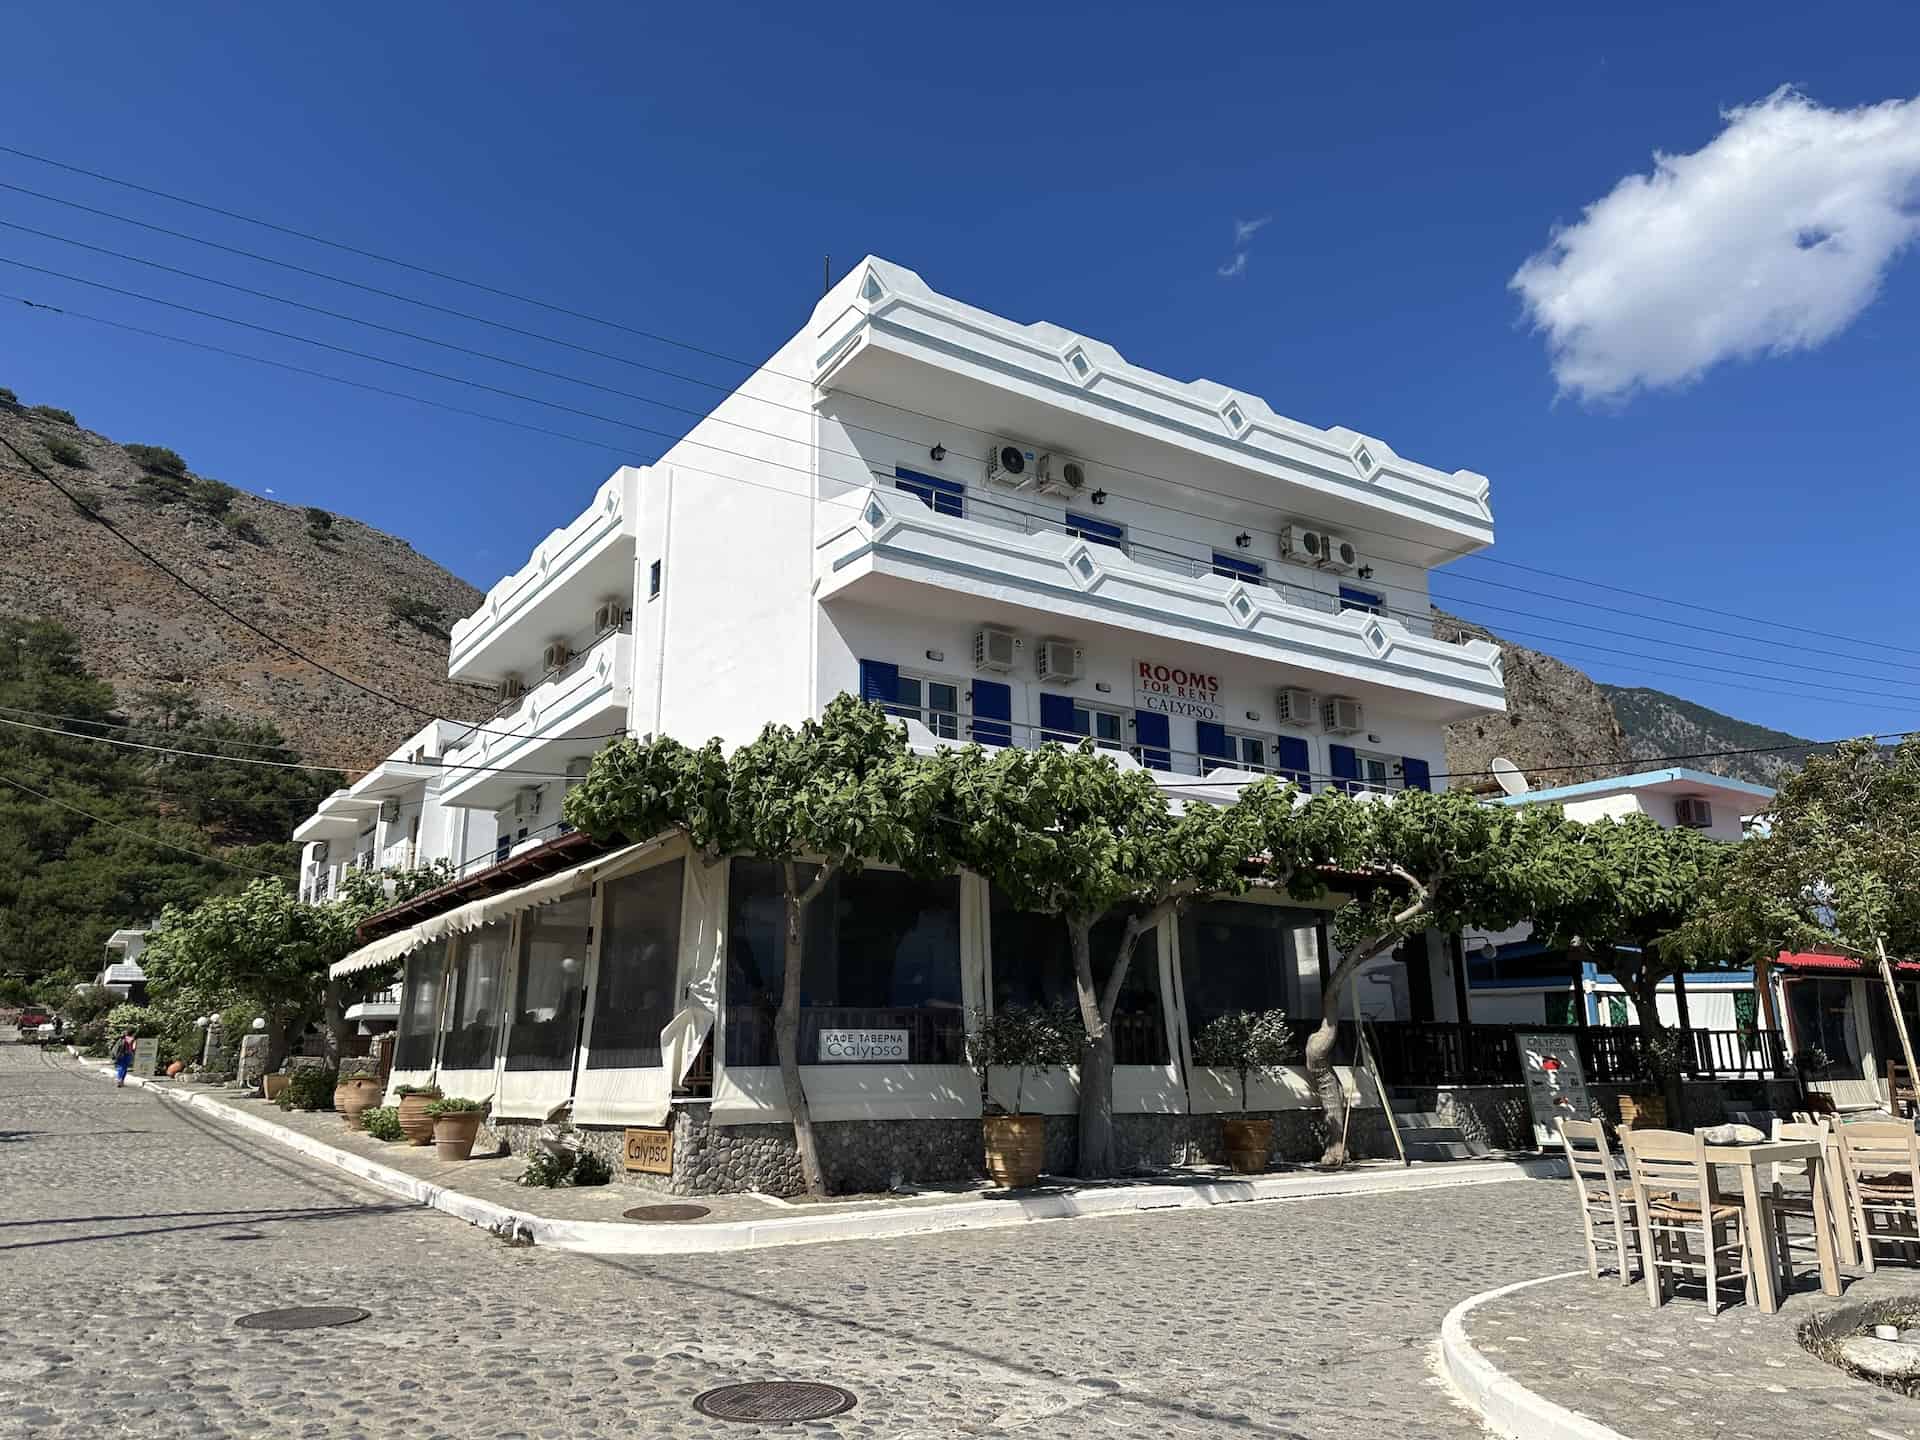 Hotel Calypso at Agia Roumeli, Crete, Greece